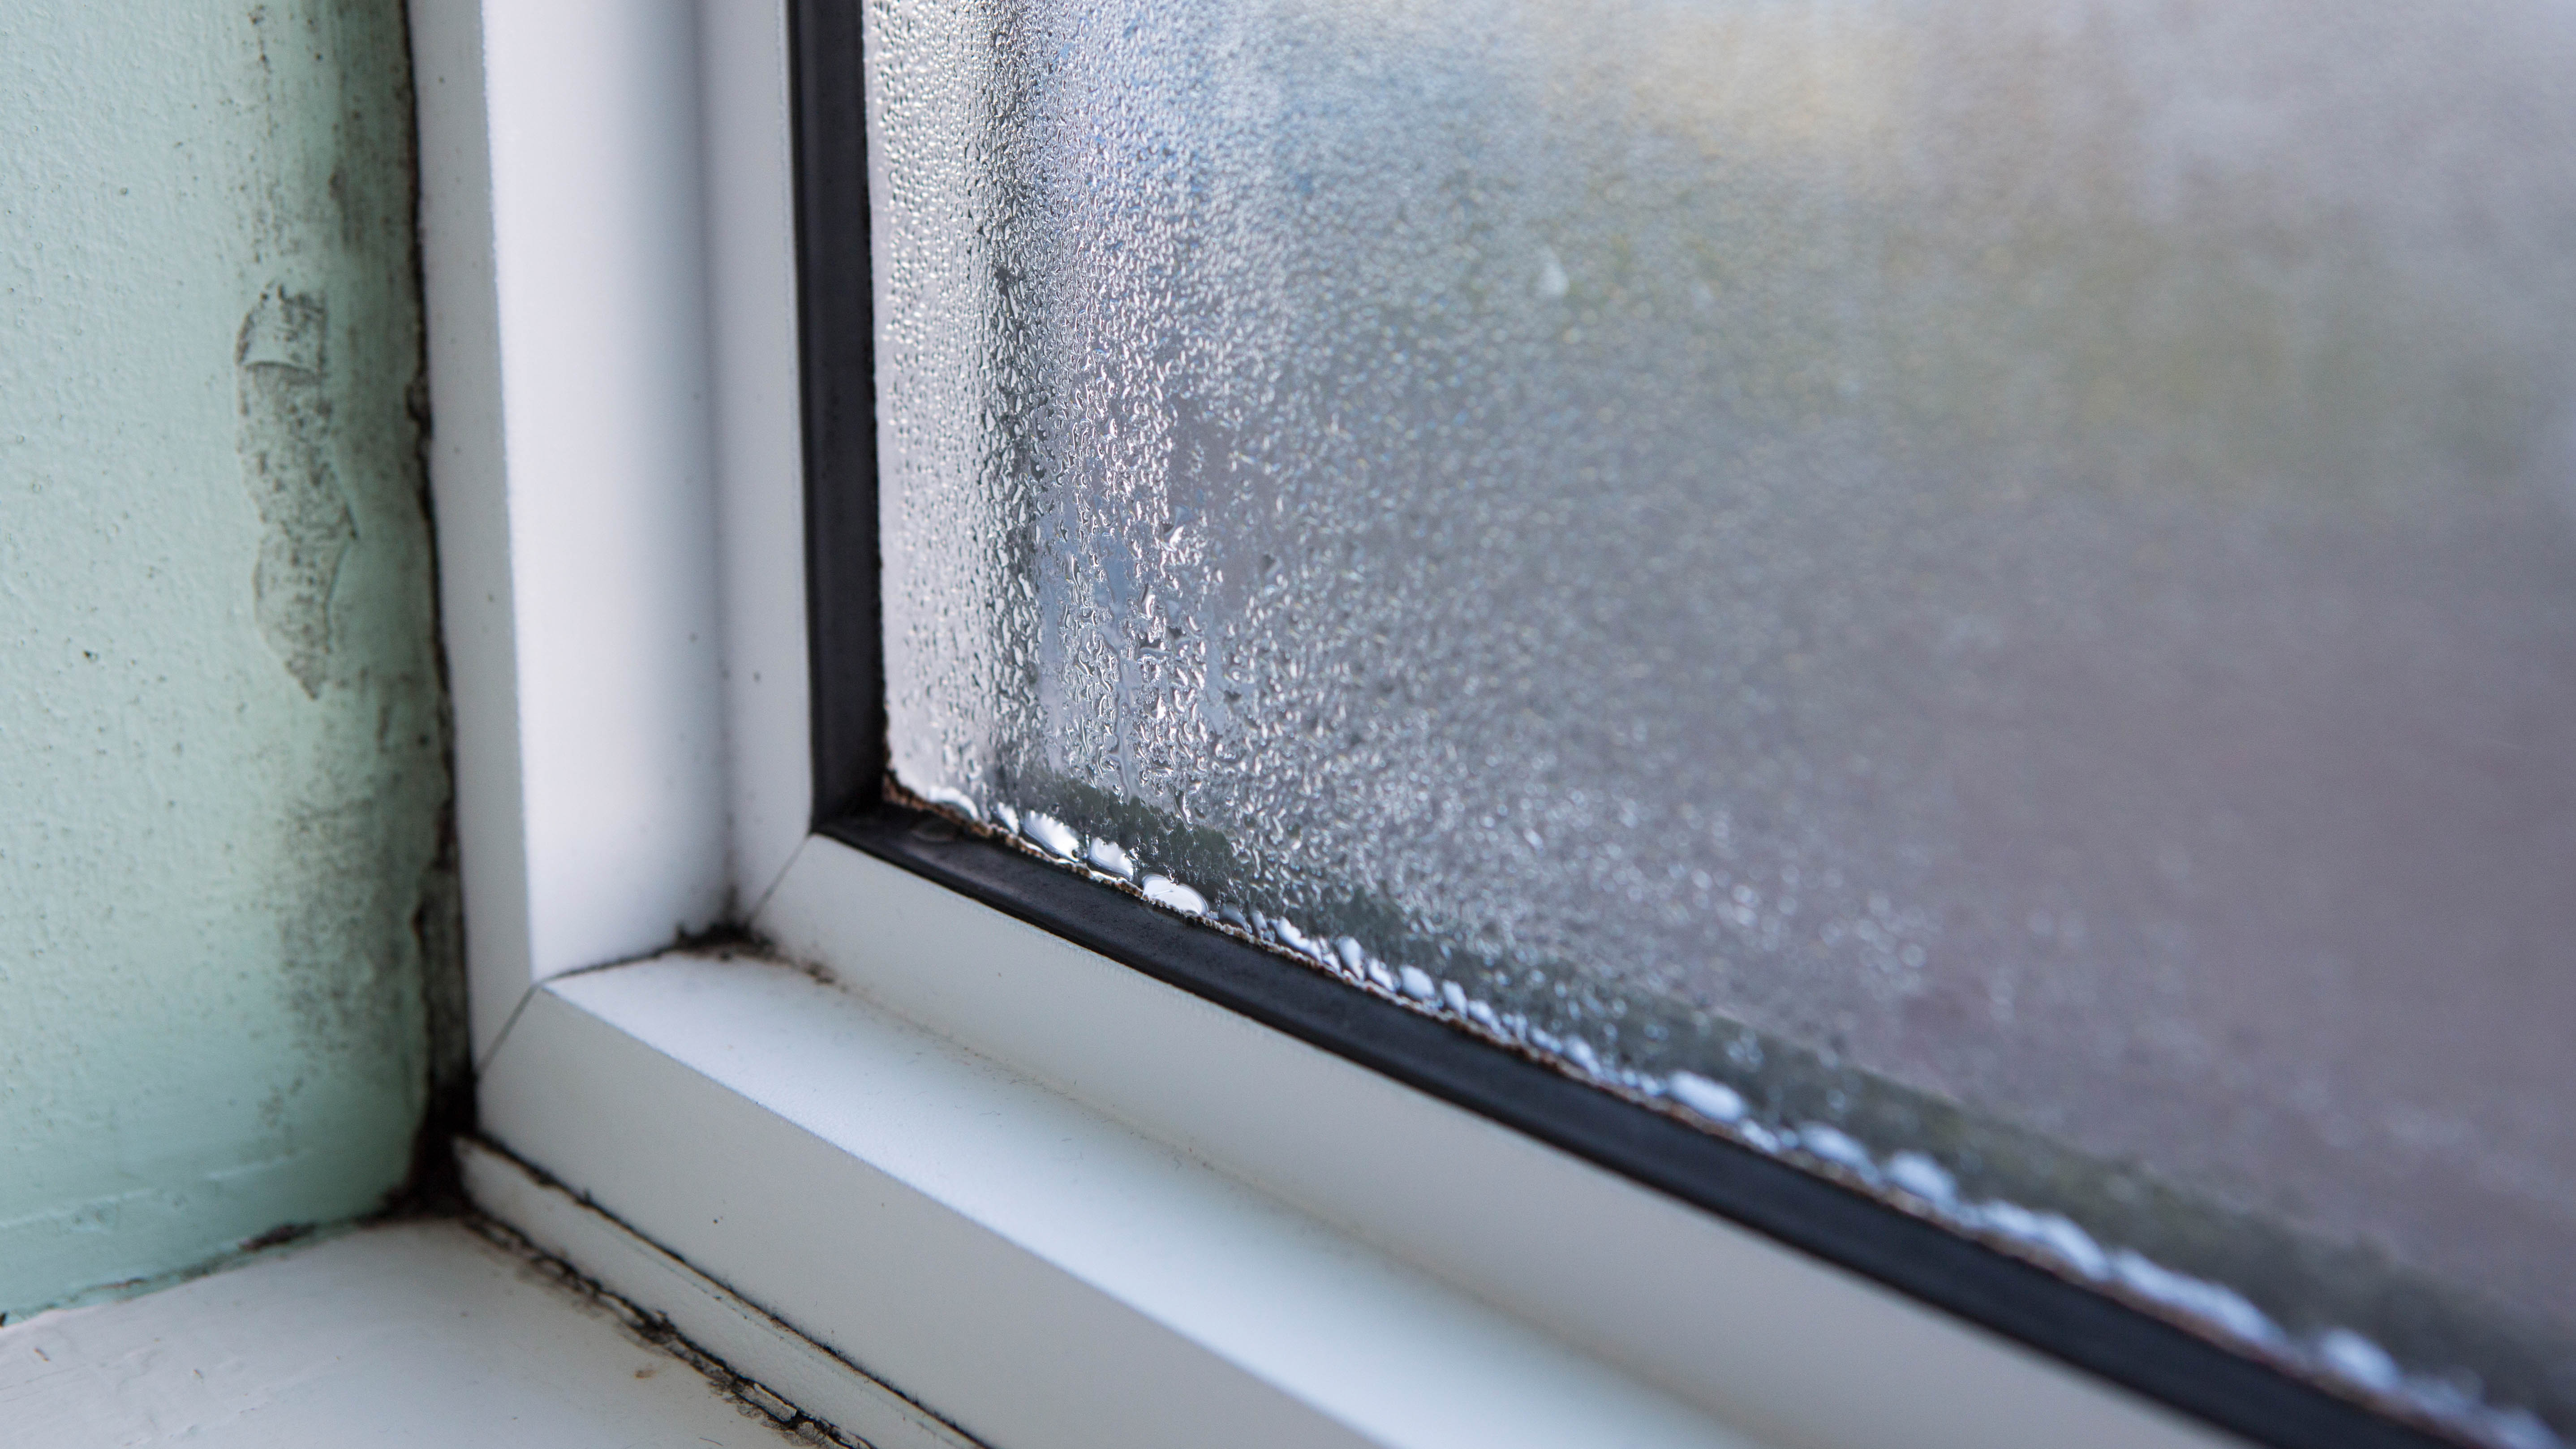 How to Stop Condensation With Window Film - Dengarden